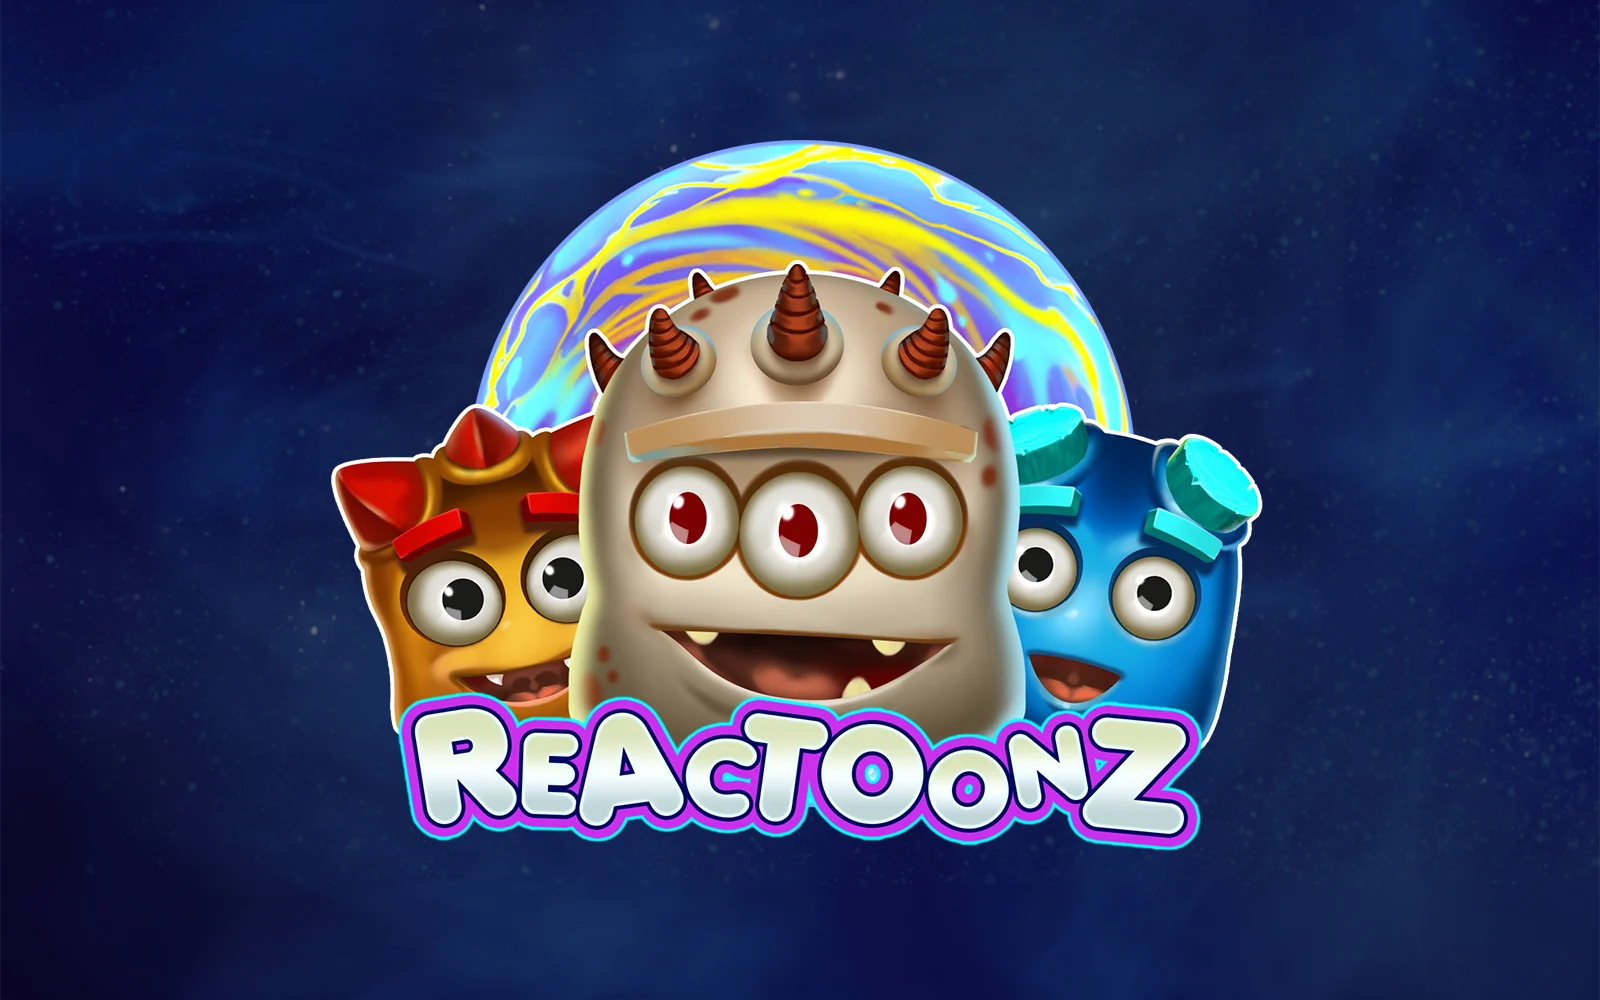 Play Reactoonz on Starcasino.be online casino